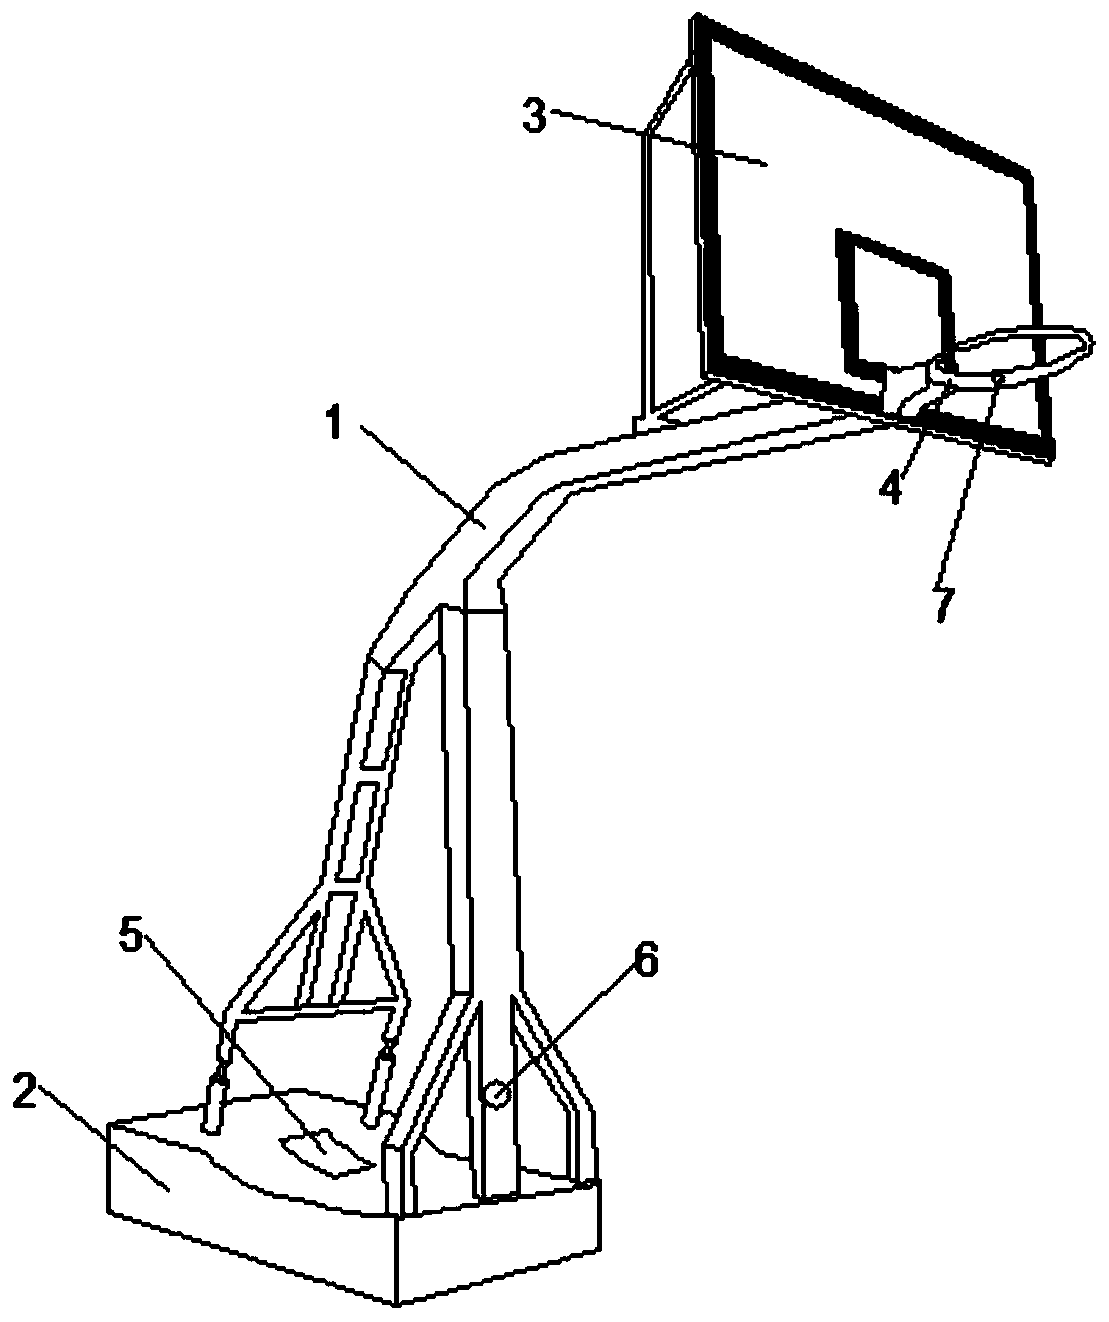 Intelligent basketball training system based on Internet of Things